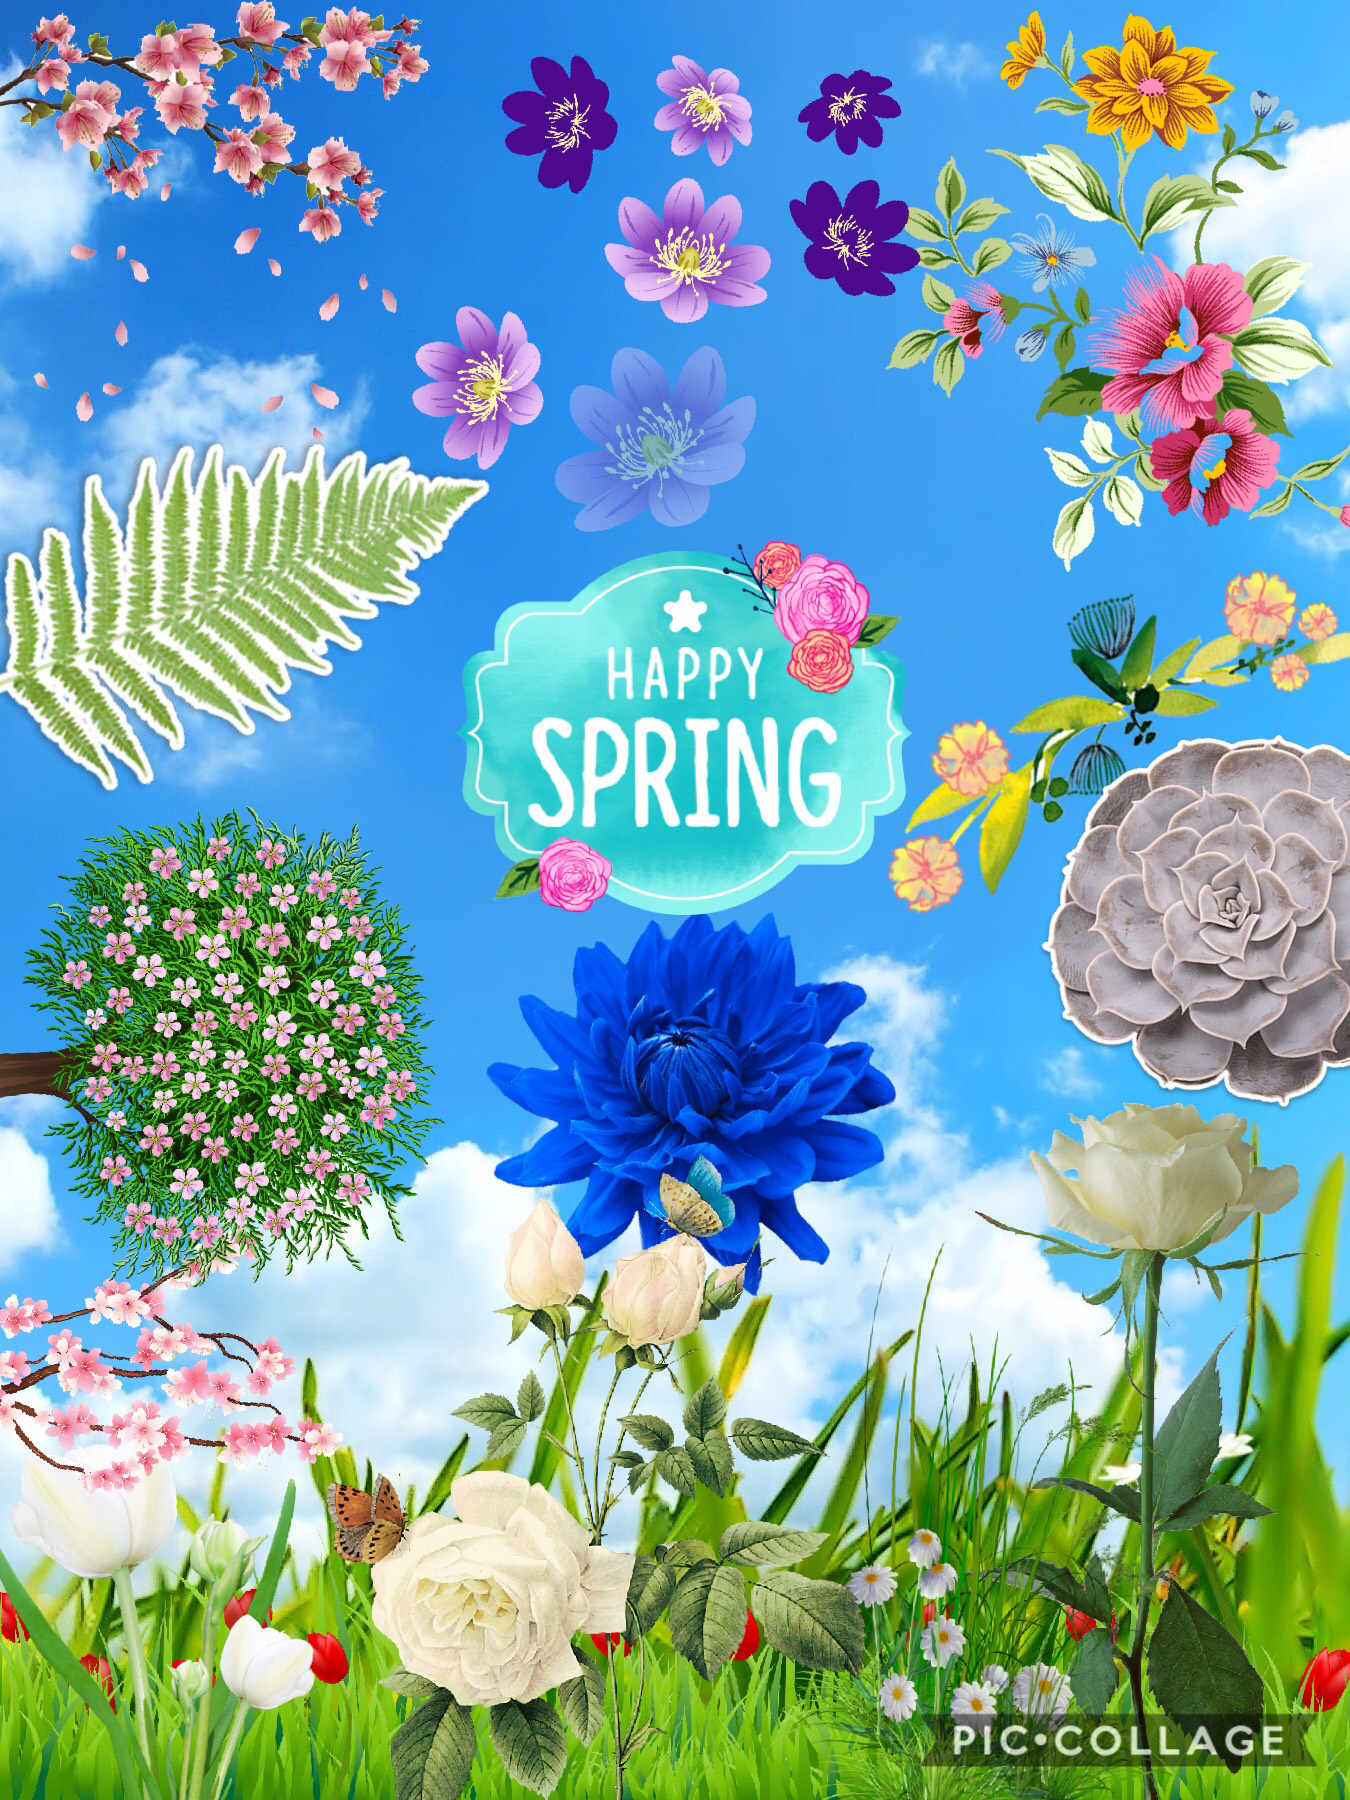 Spring’s here guys! Happy Spring!